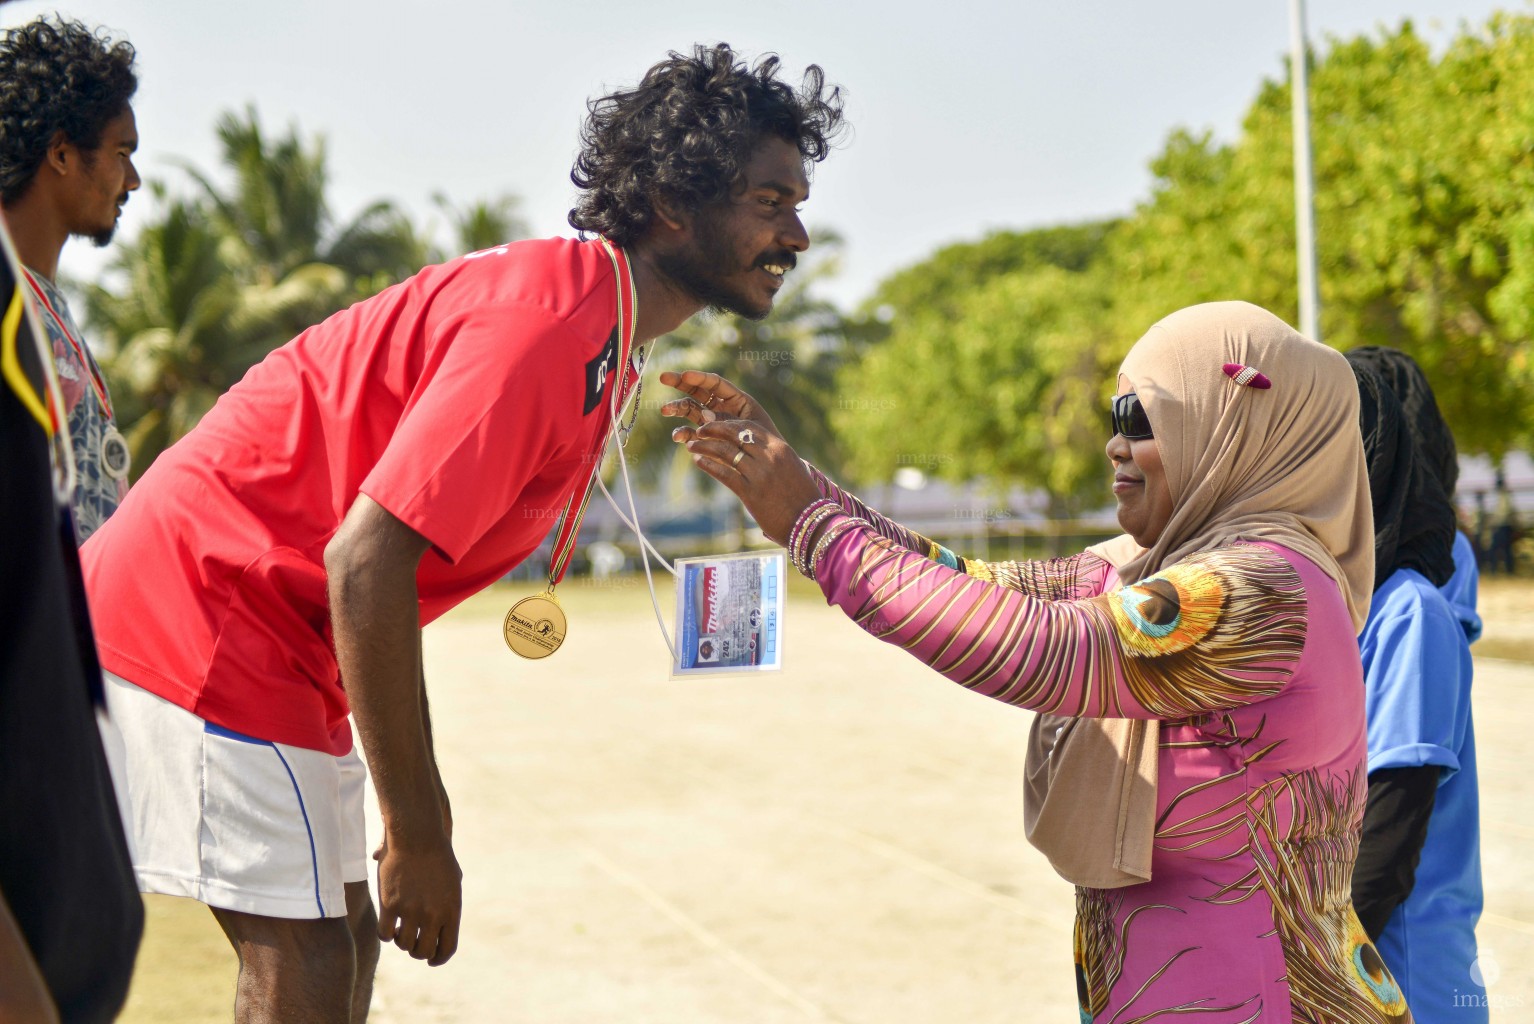 Day 2 of the Nakita Interschool Junior Championship in Kulhudhuffushi', Maldives, Tuesday, March. 22, 2016. (Images.mv Photo/Jaufar Ali).